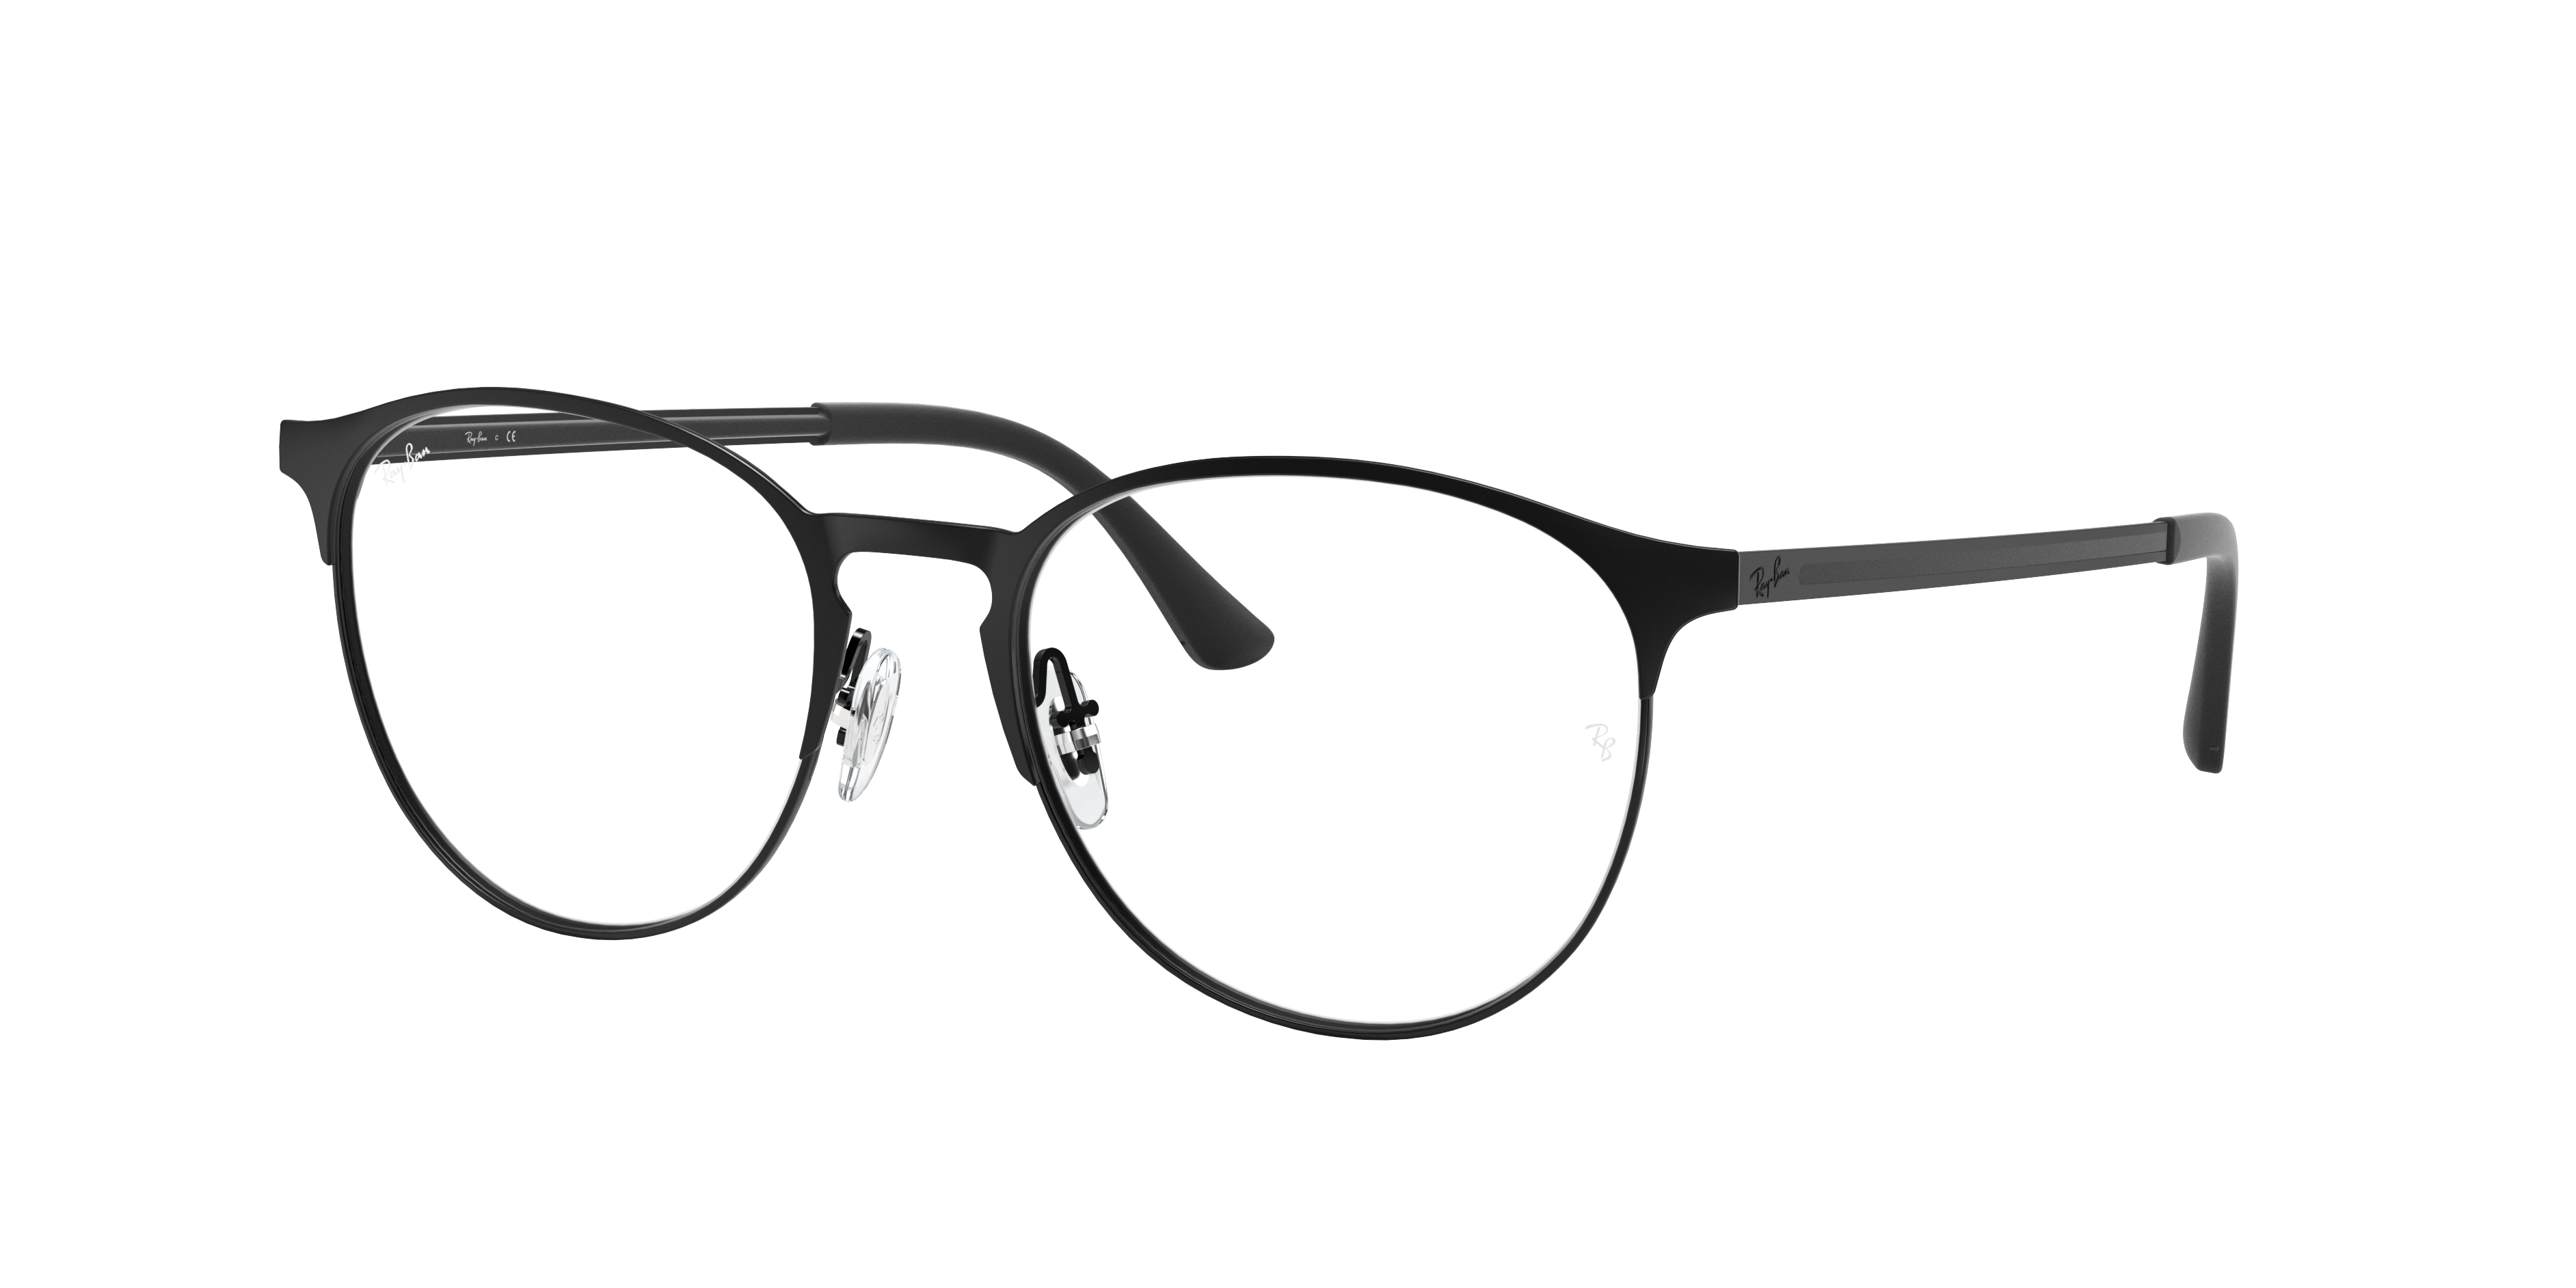 opsm ray ban prescription sunglasses